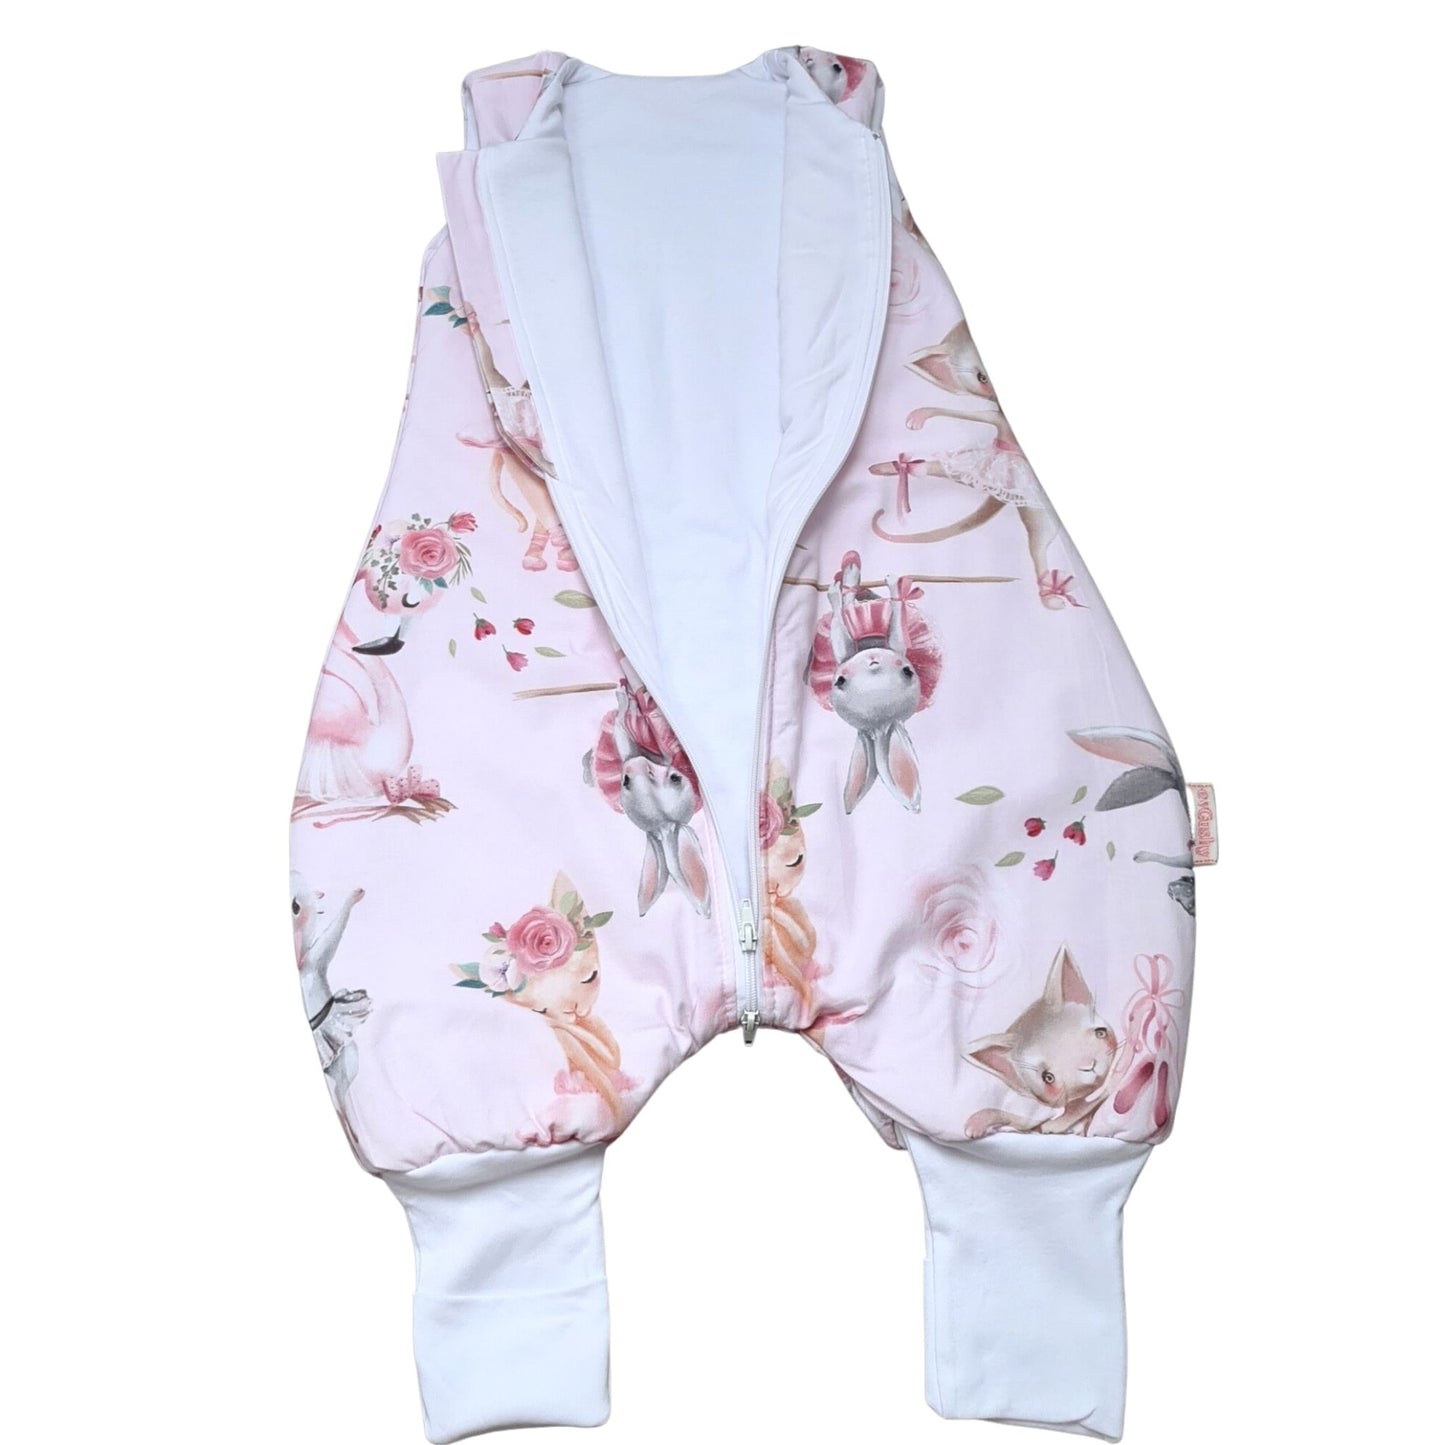 evcushy baby and toddler sleeping bag with feet sleep sack 100% cotton pink 2.5 tog with ballerinas cotton lining